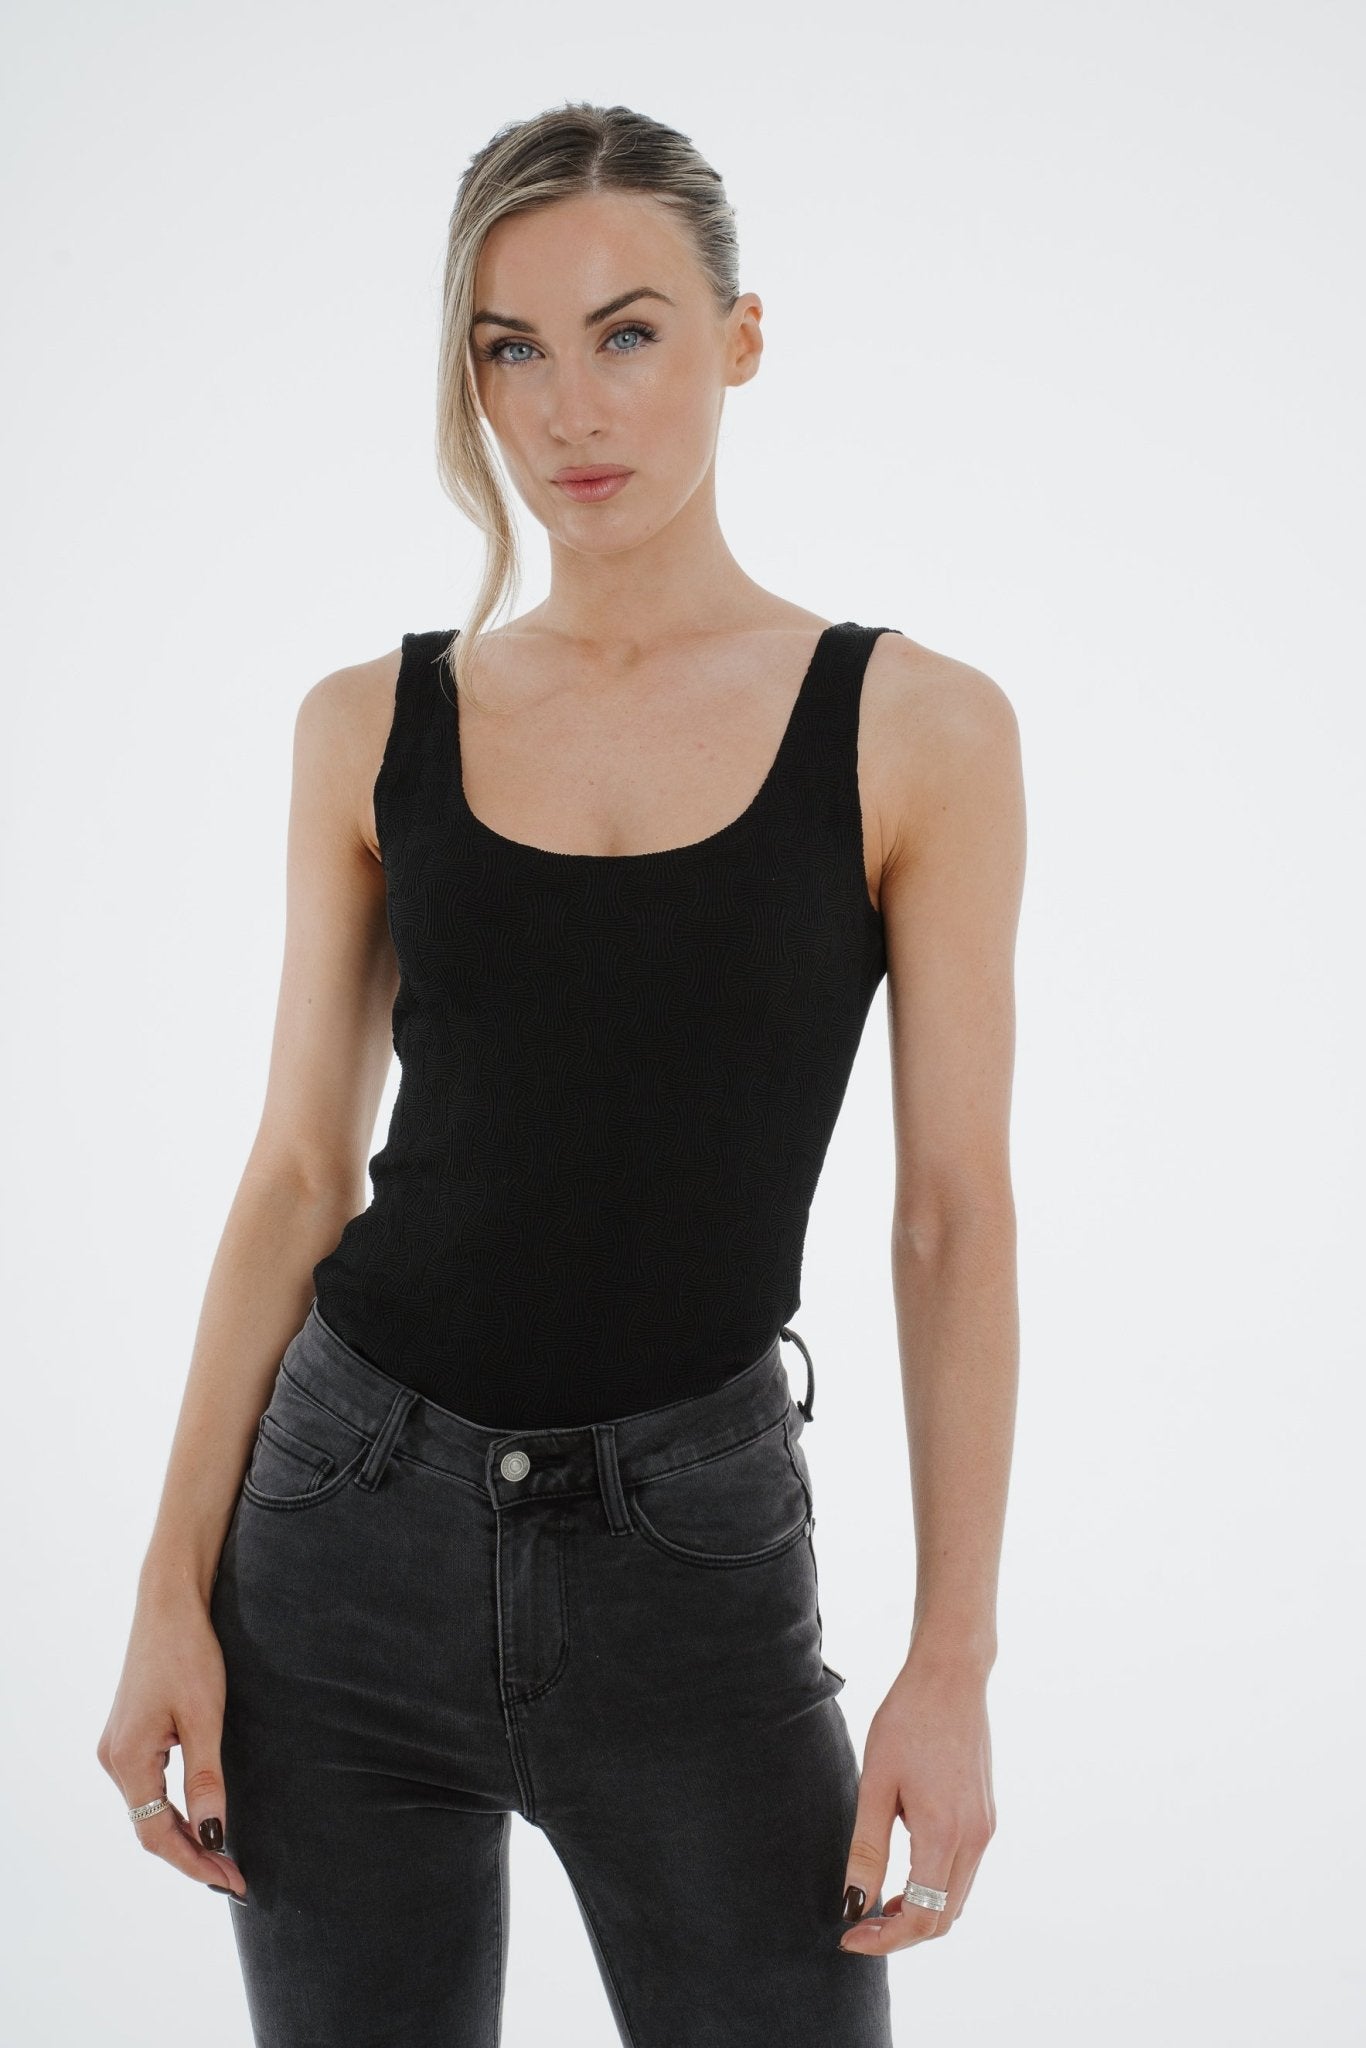 Kate Textured Bodysuit In Black - The Walk in Wardrobe